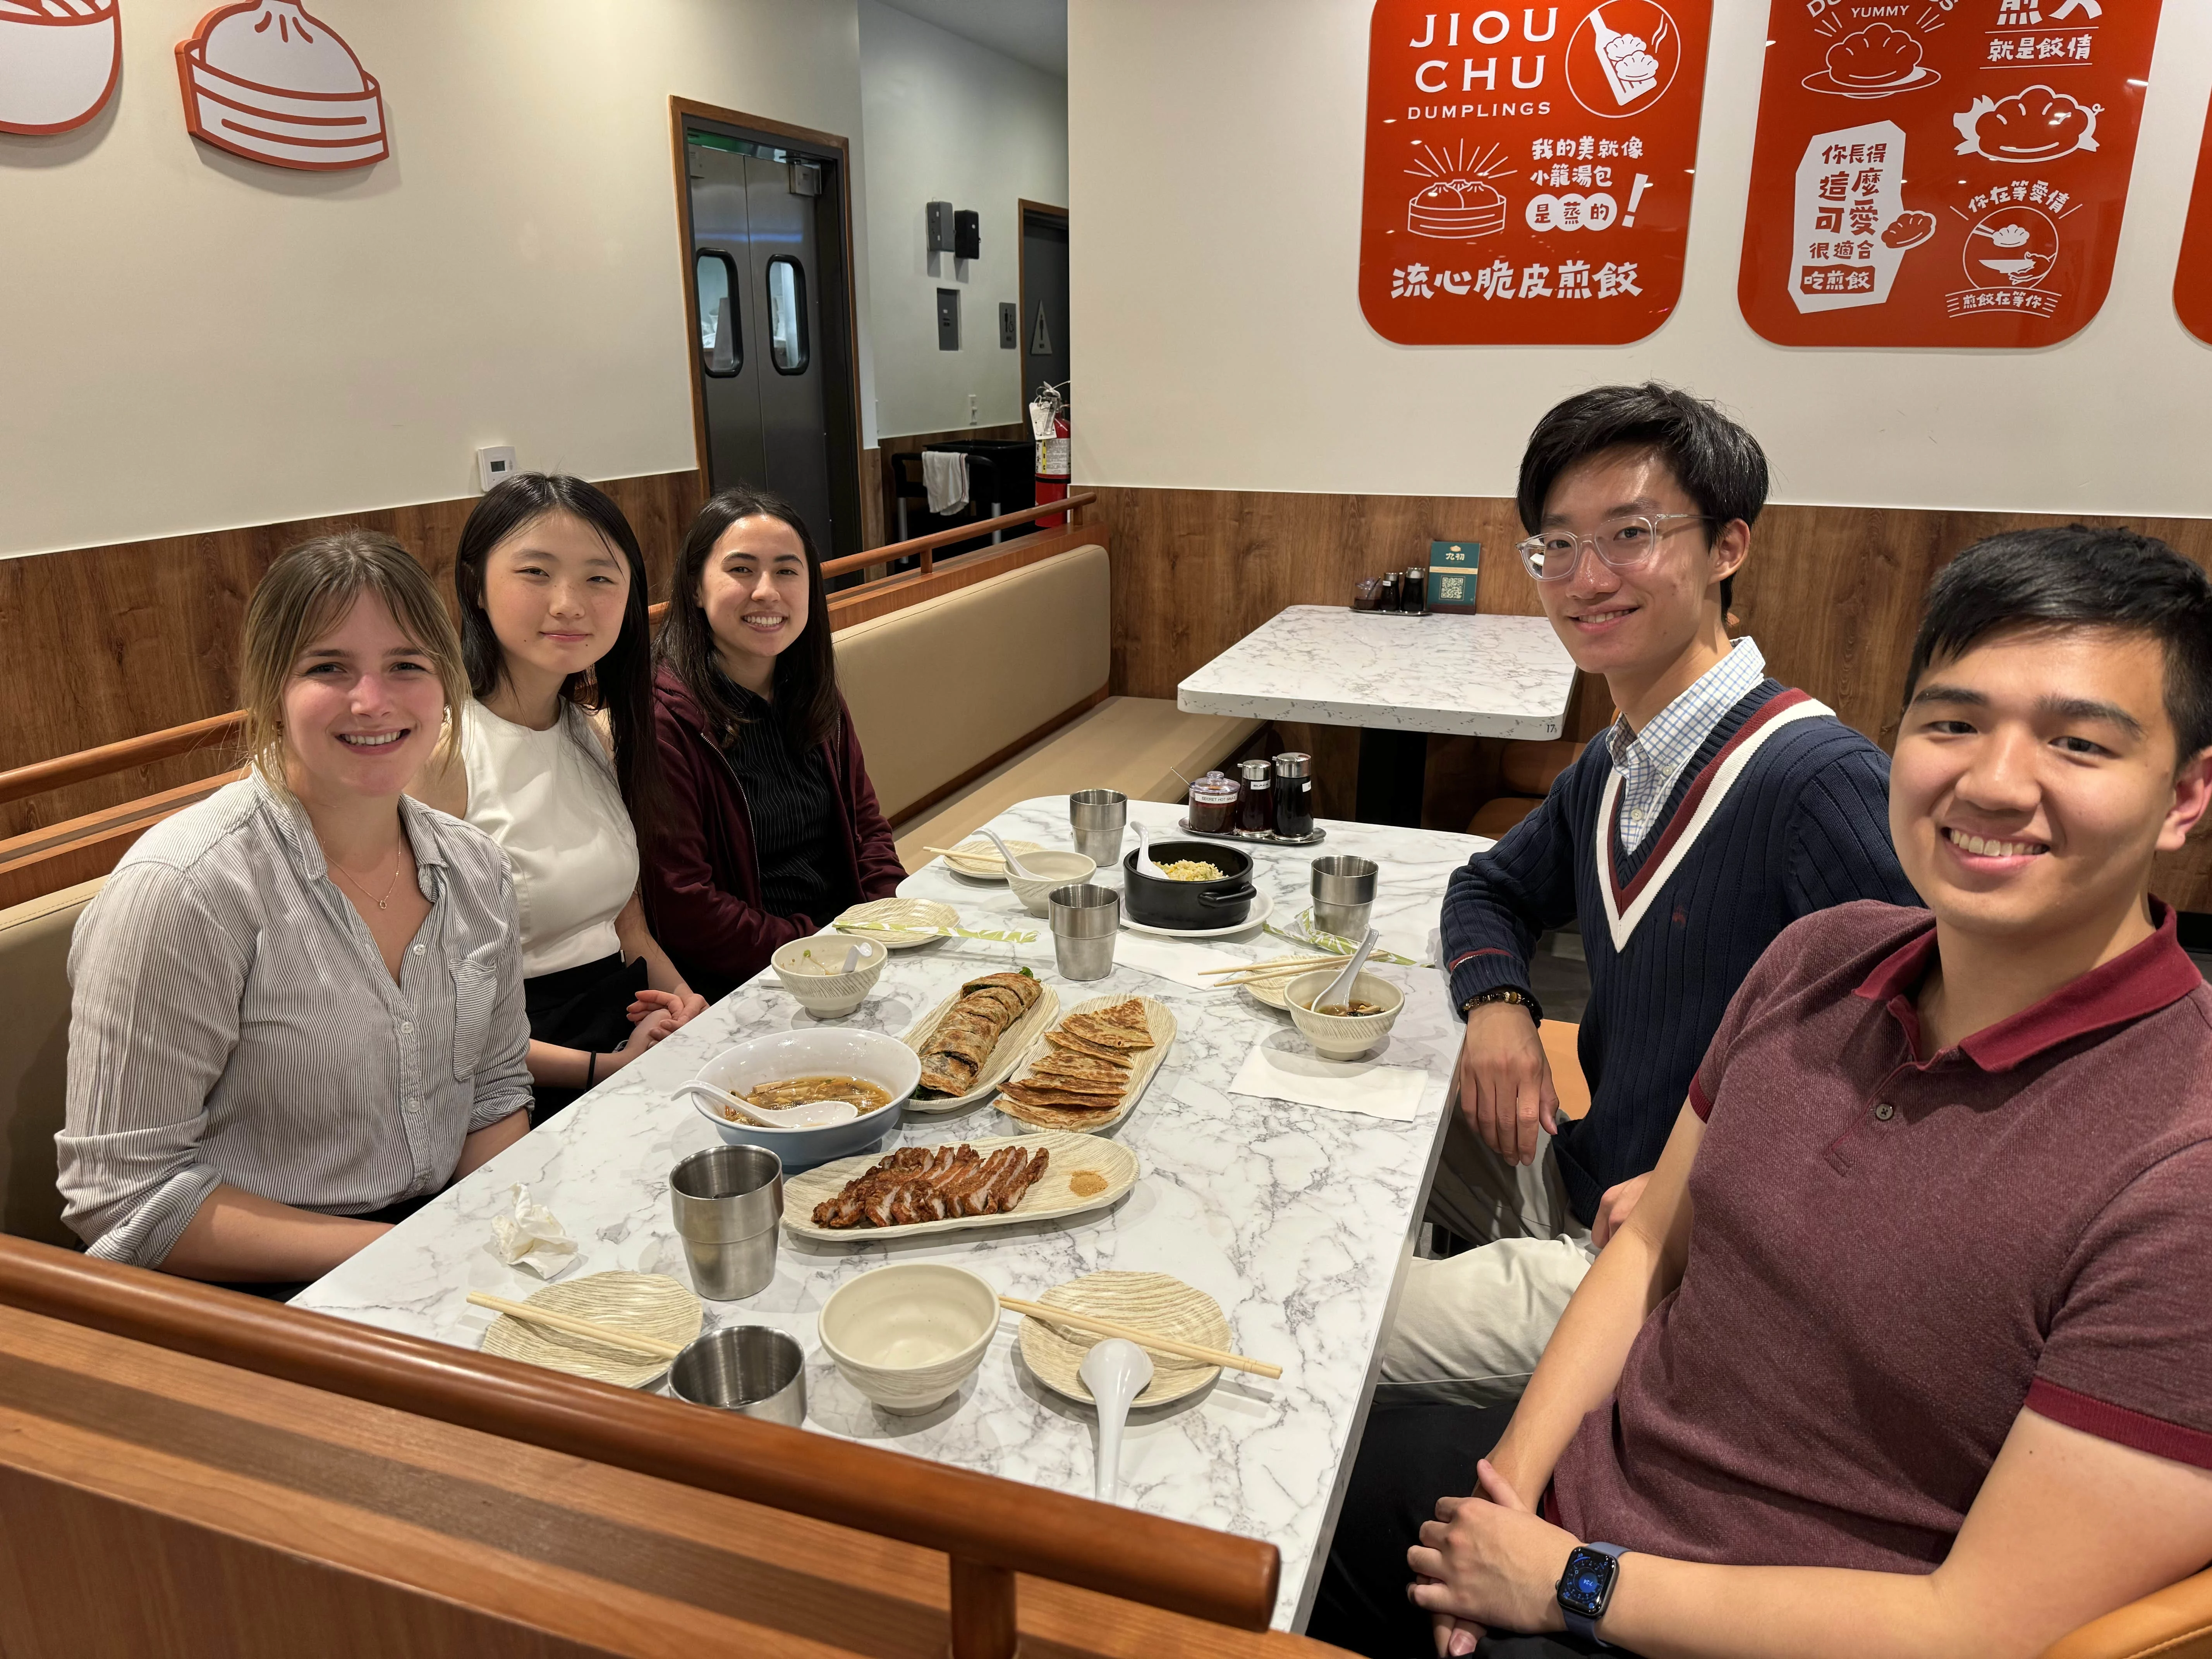 5 students eating dumplings at a restaurant